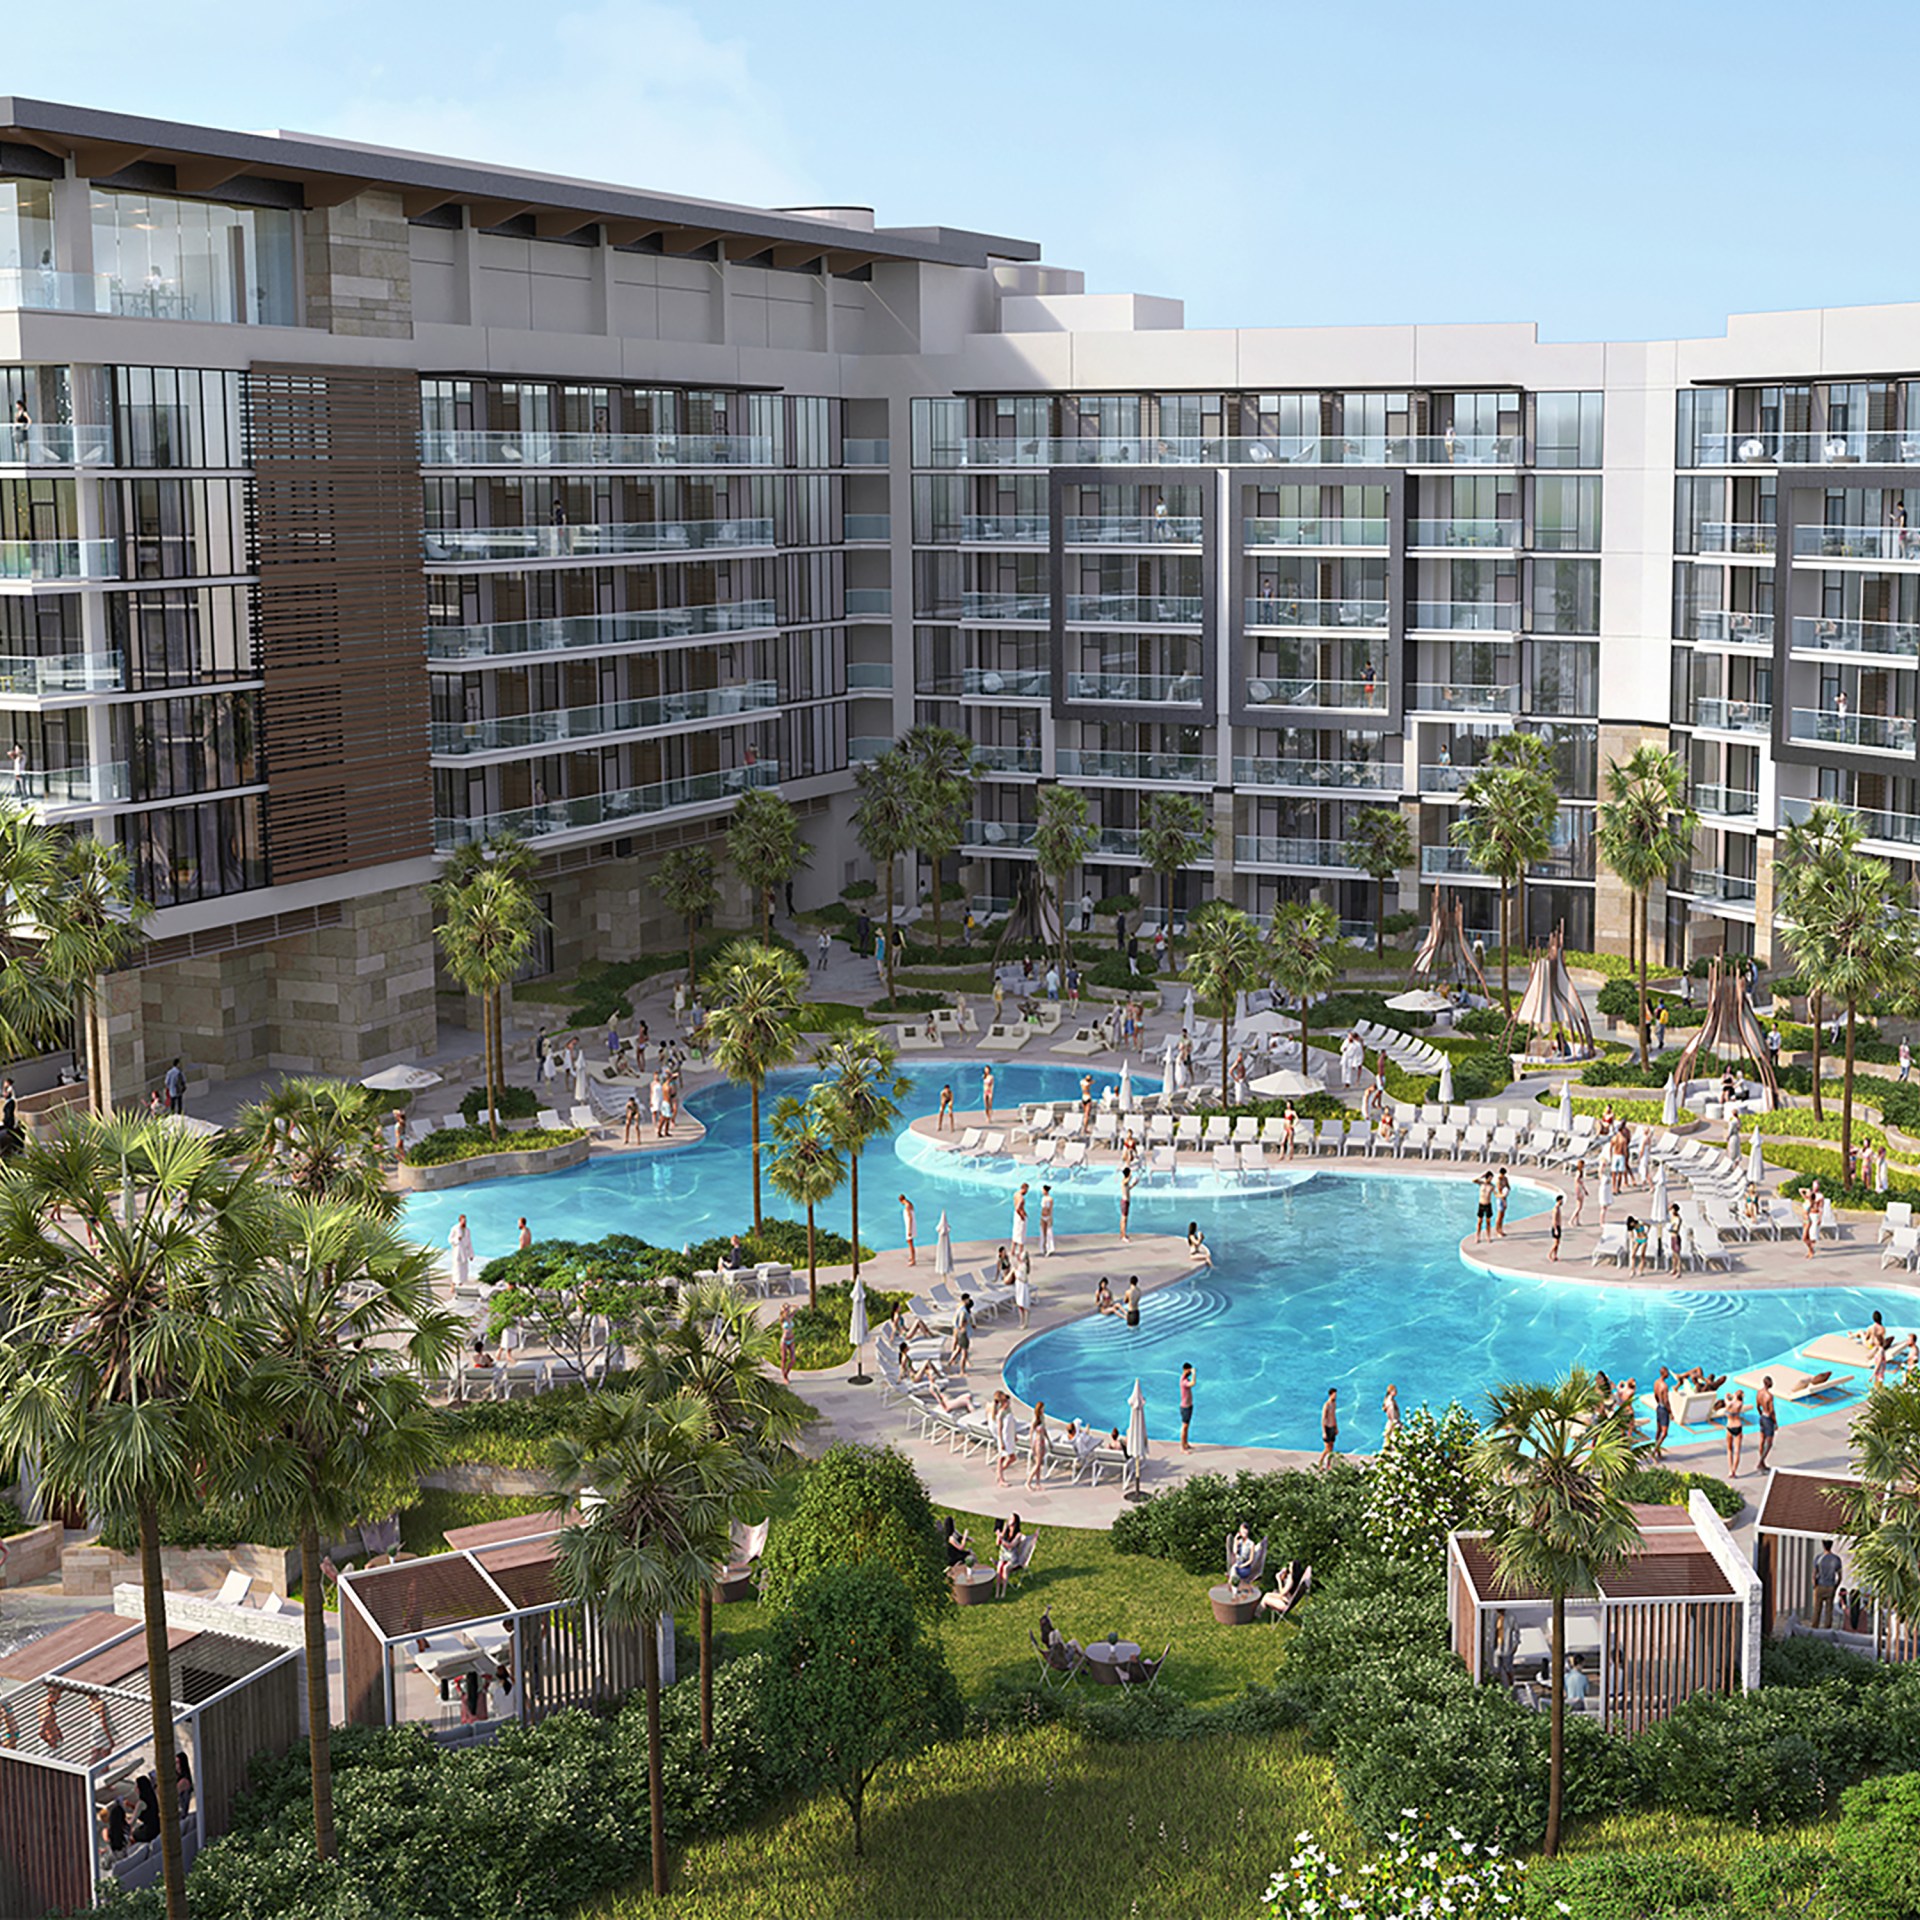 evermore resort Conrad Orlando - Exterior Resort Pool